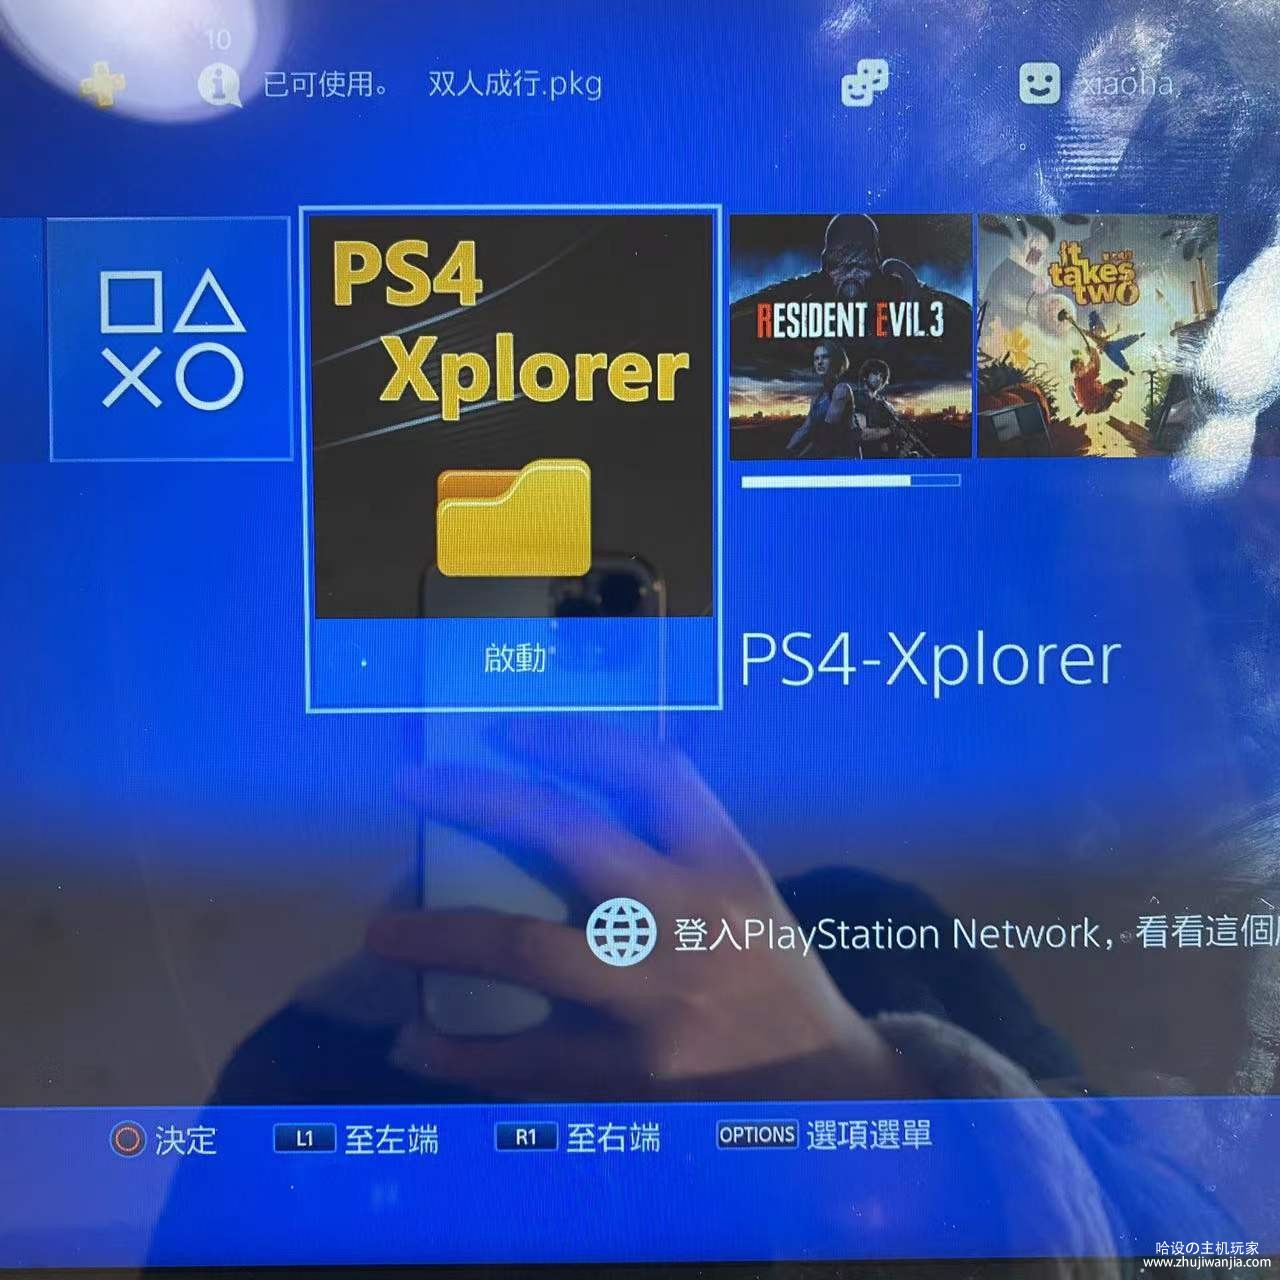 bison Foran dig Prædiken PS4-Xplorer 1.32/1.33 文件浏览器—『PS4玩机攻略』—哈设の主机玩家丨PS4丨Steam Deck丨ROG  ally丨PSV丨3DS丨折腾才是乐趣所在-zhujiwanjia.com